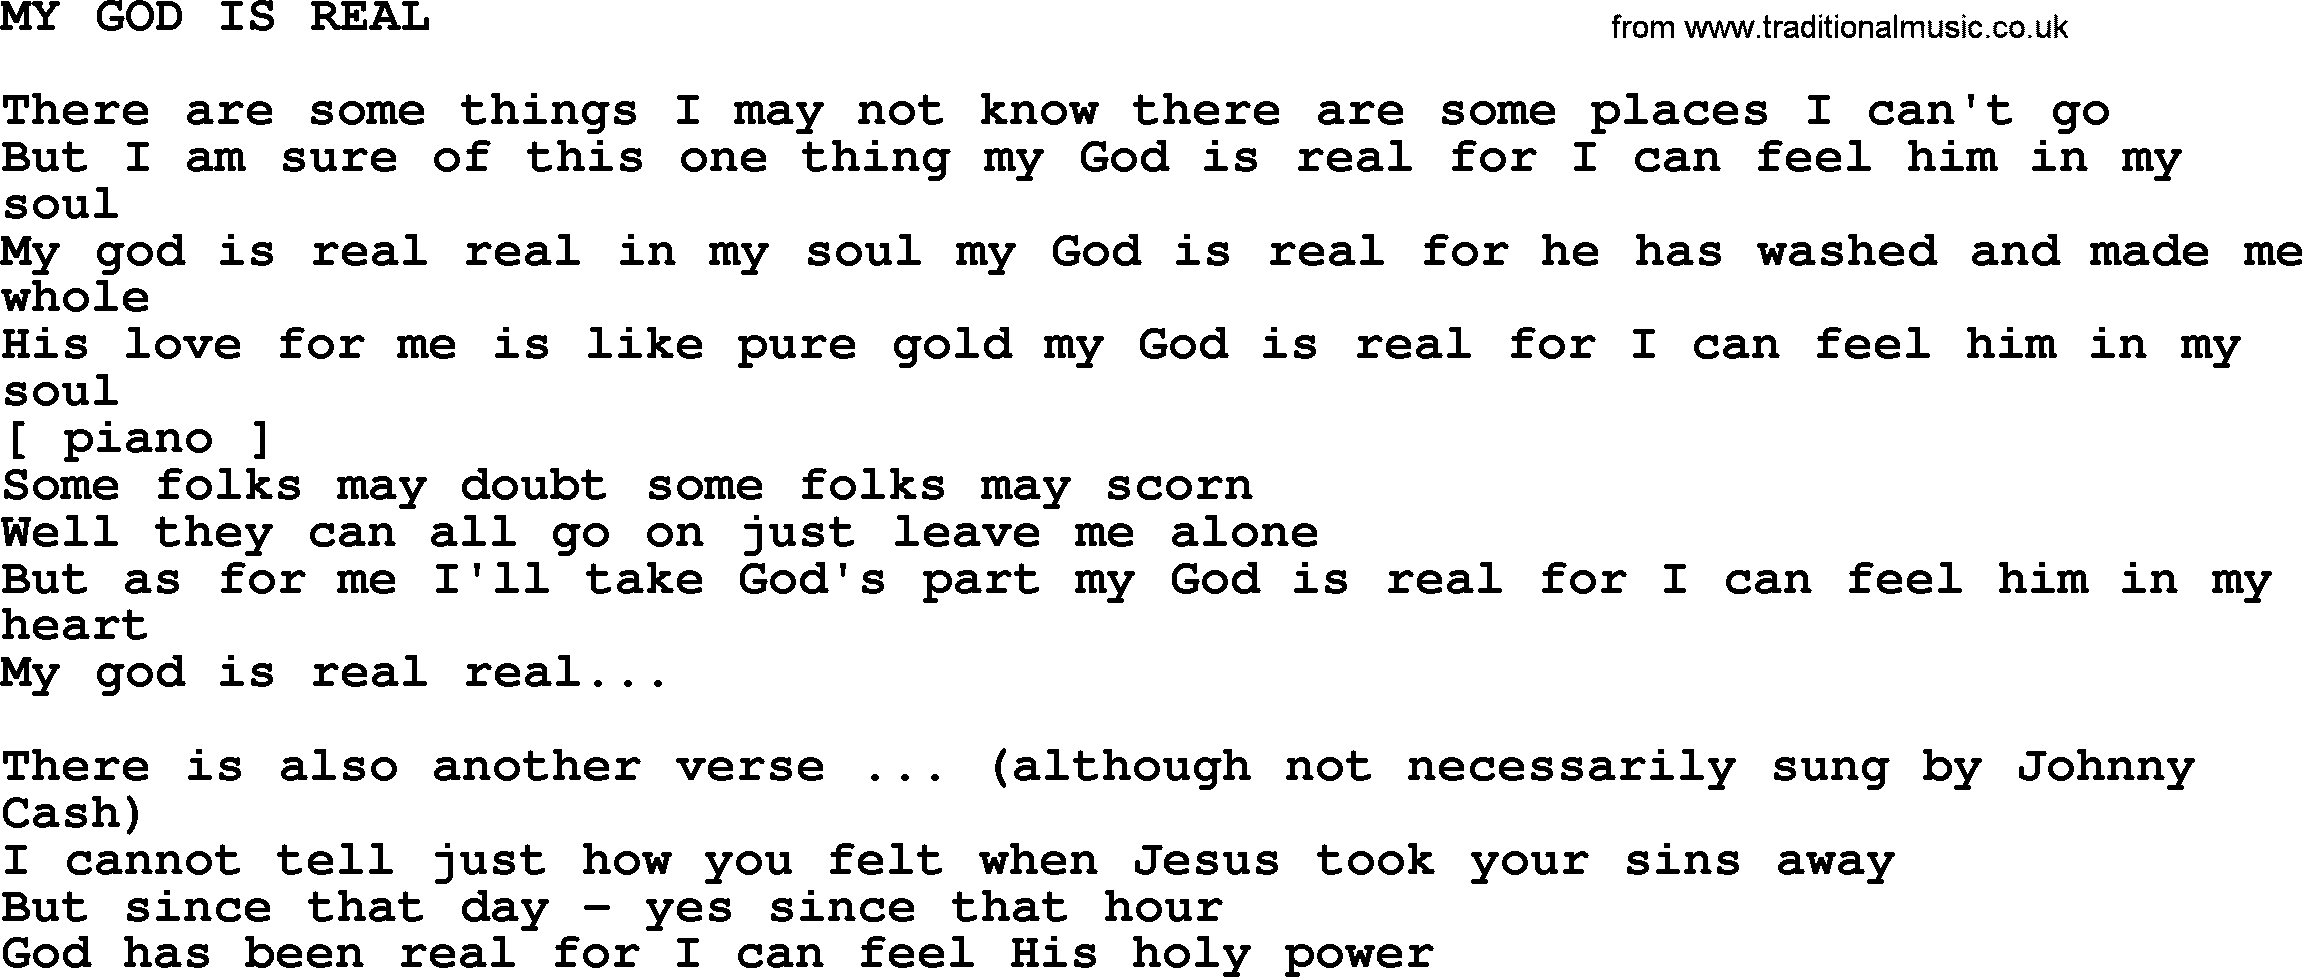 Johnny Cash song My God Is Real.txt lyrics